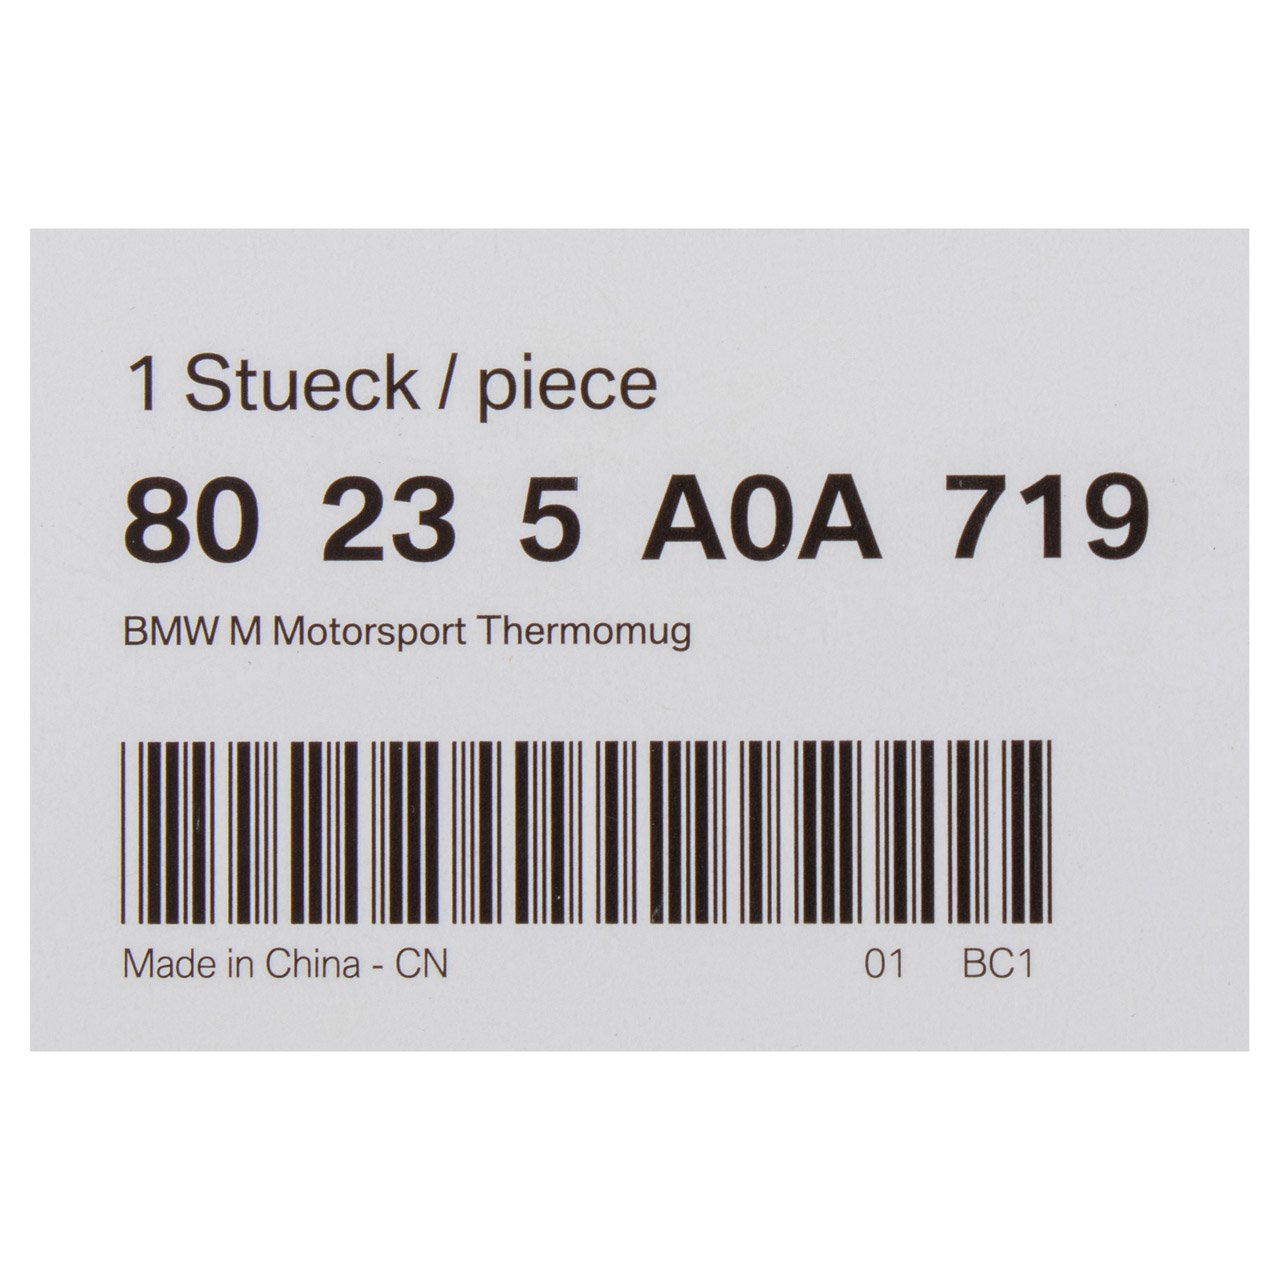 Genuine BMW M MotorSport Silver Thermal Insulated Travel Mug 80235A0A719 -  SSDD MotorSport Ltd